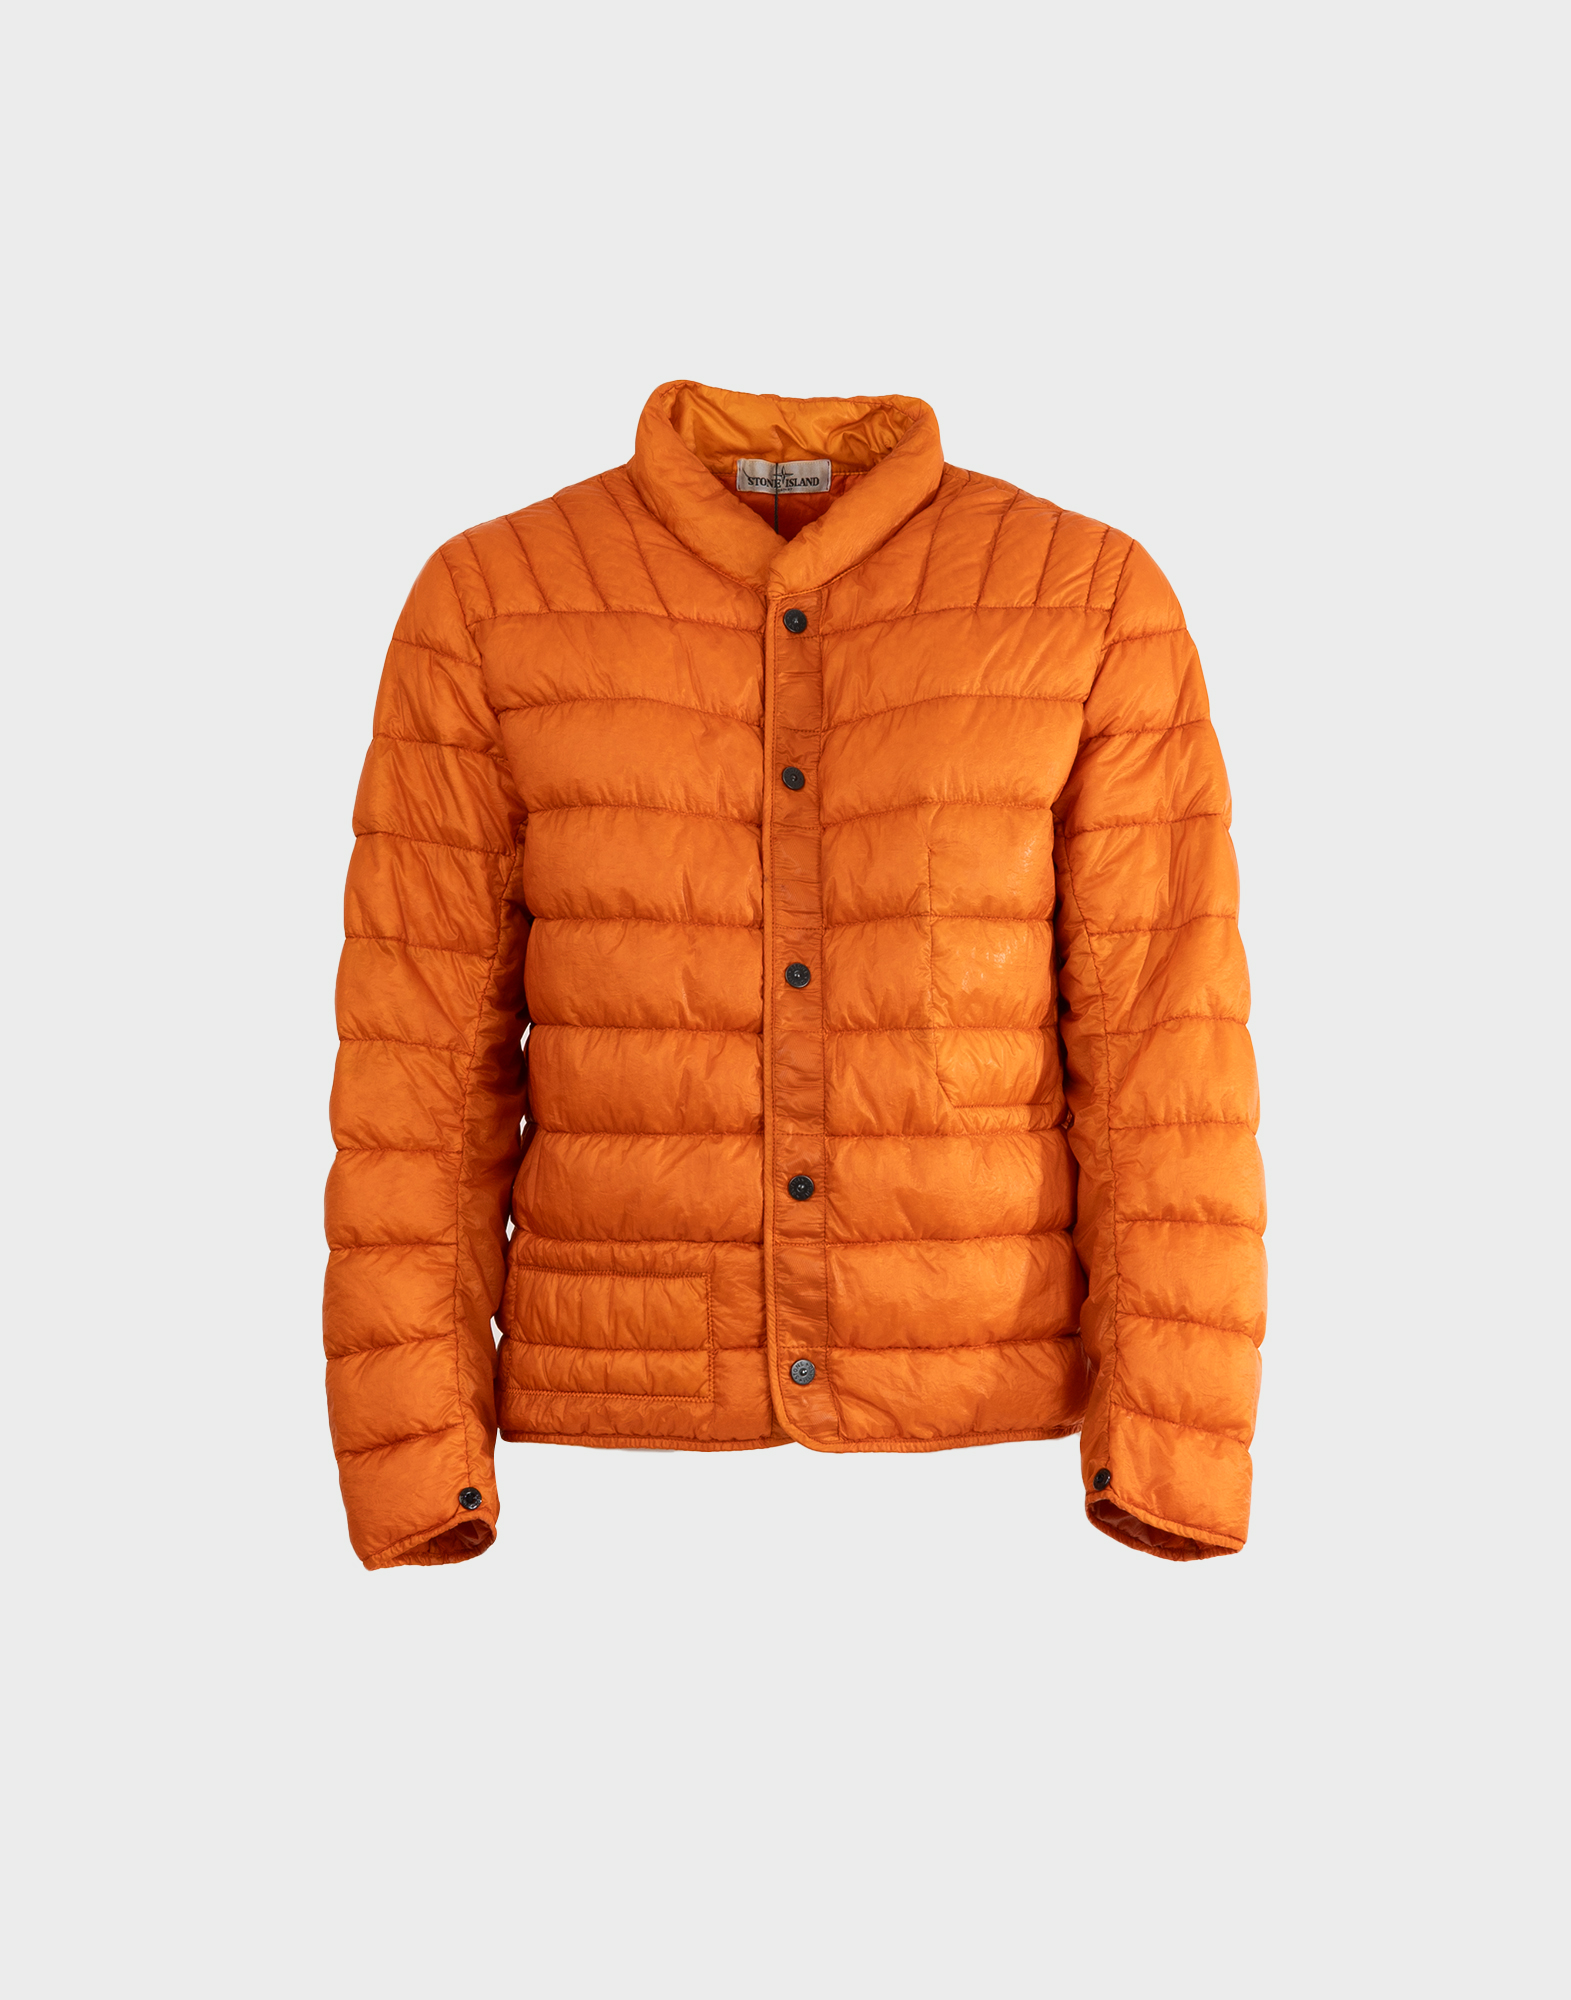 stone island orange down jacket for men 90s